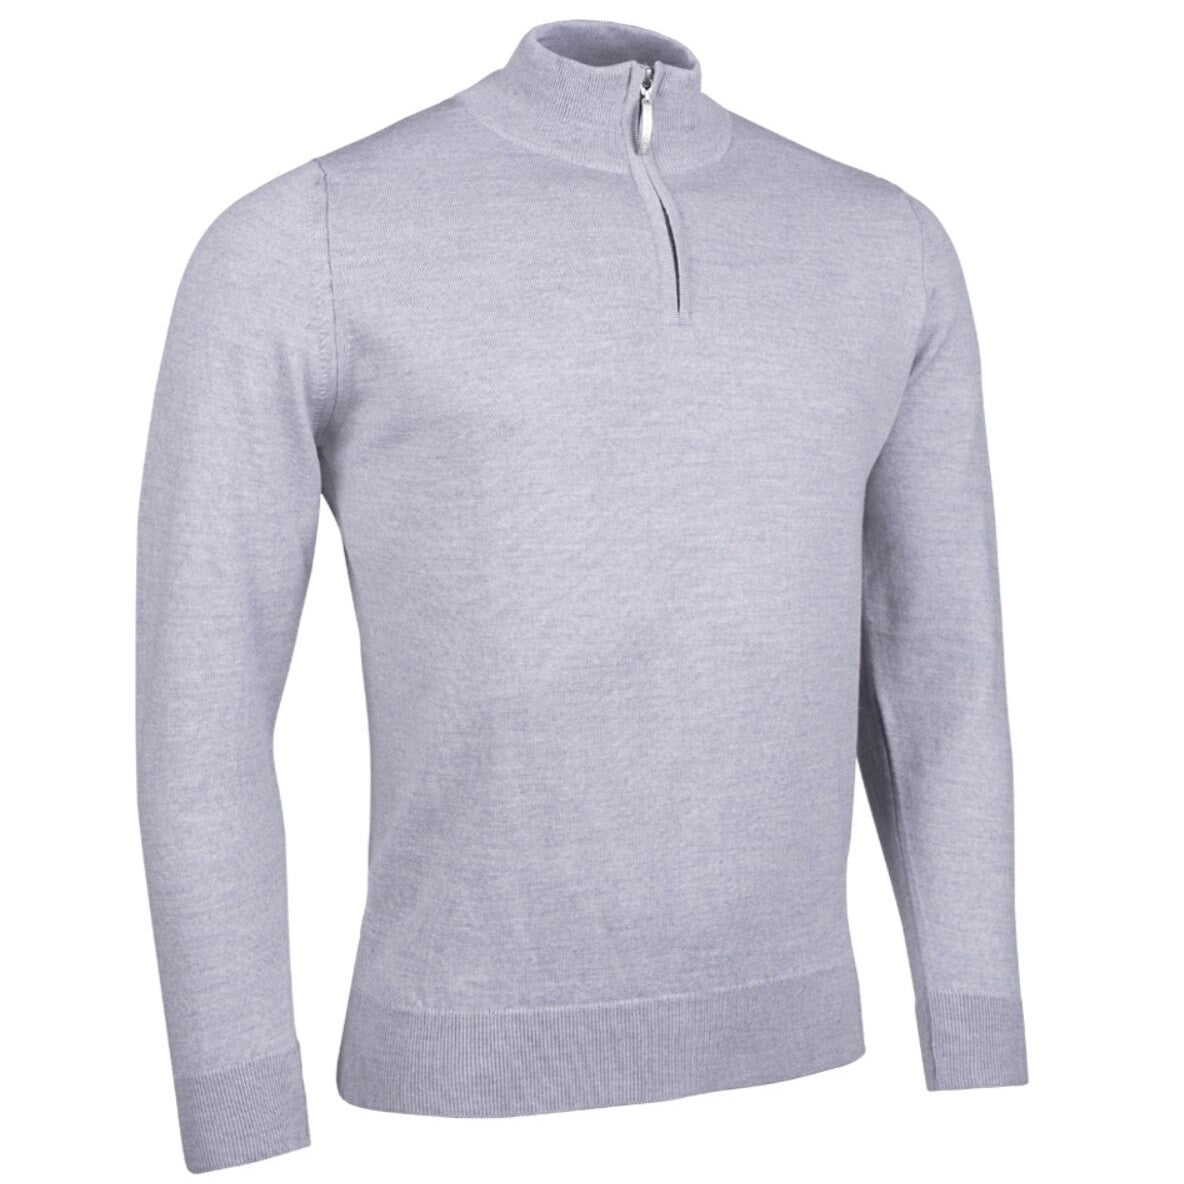 GLENMUIR Jasper Quarter Zip Merino Wool Sweater - Mens - Light Grey Marl